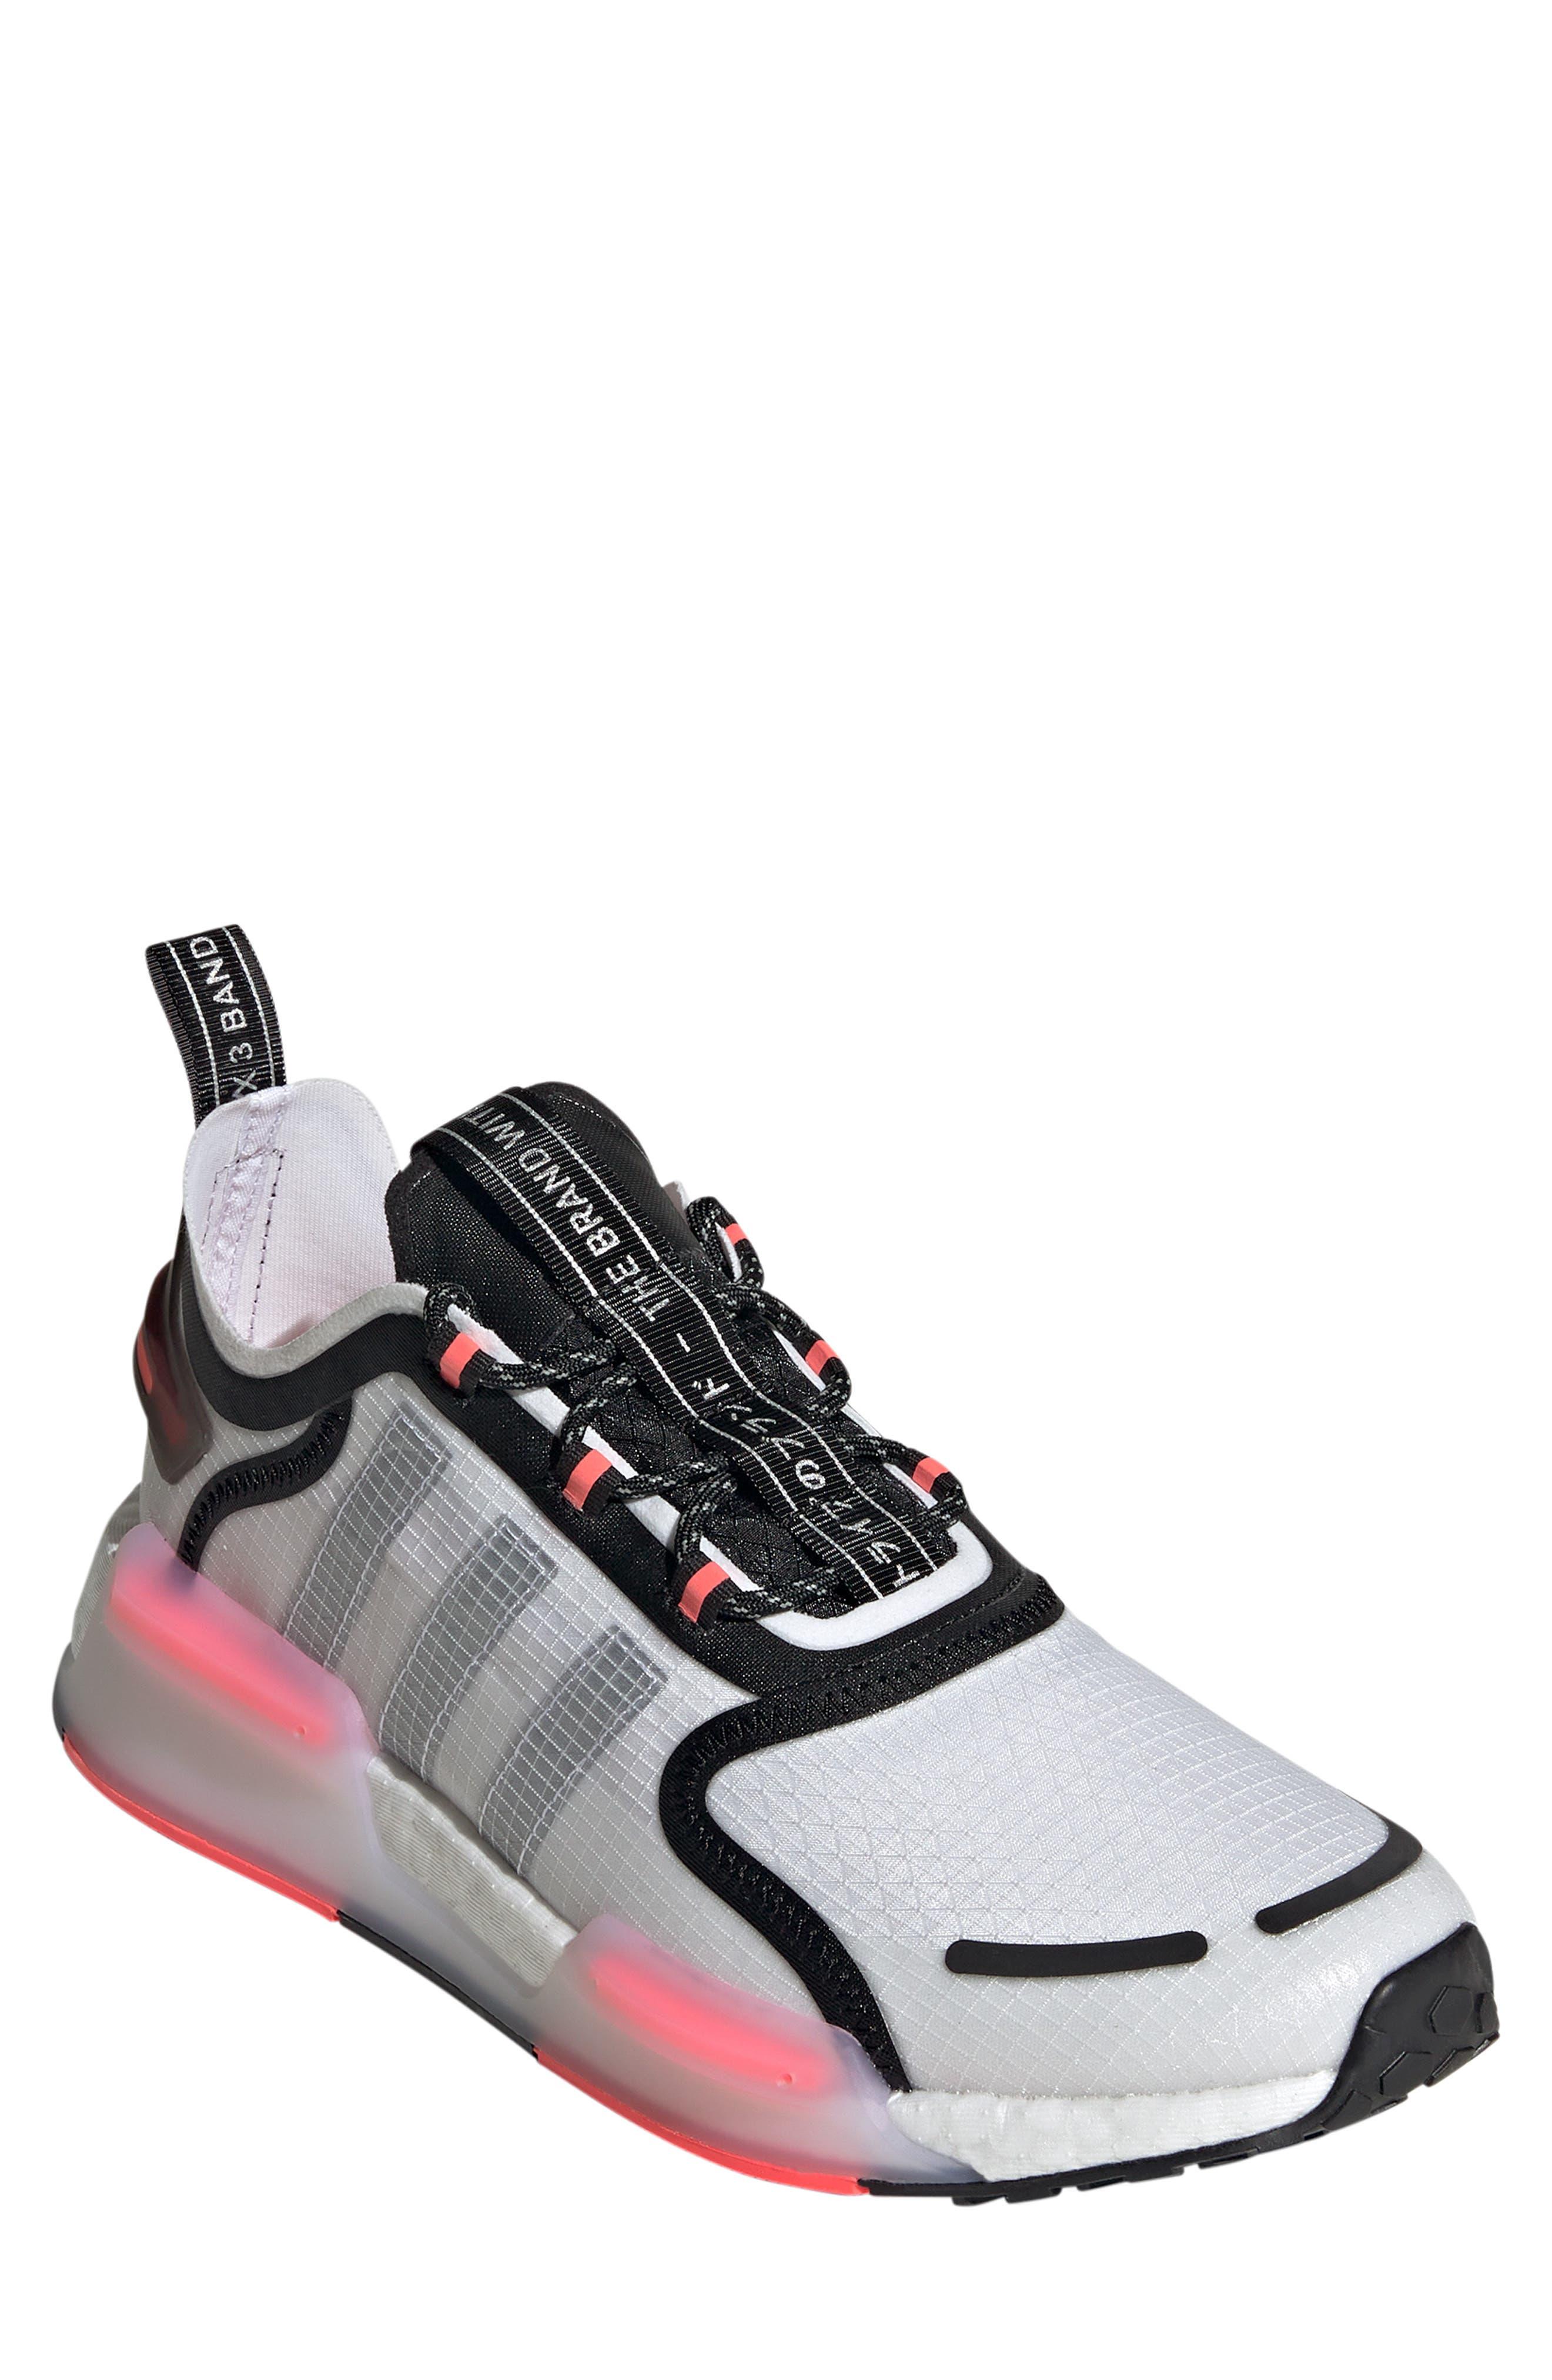 Lyst Running Shoe Men for Nmd_v3 White in adidas |